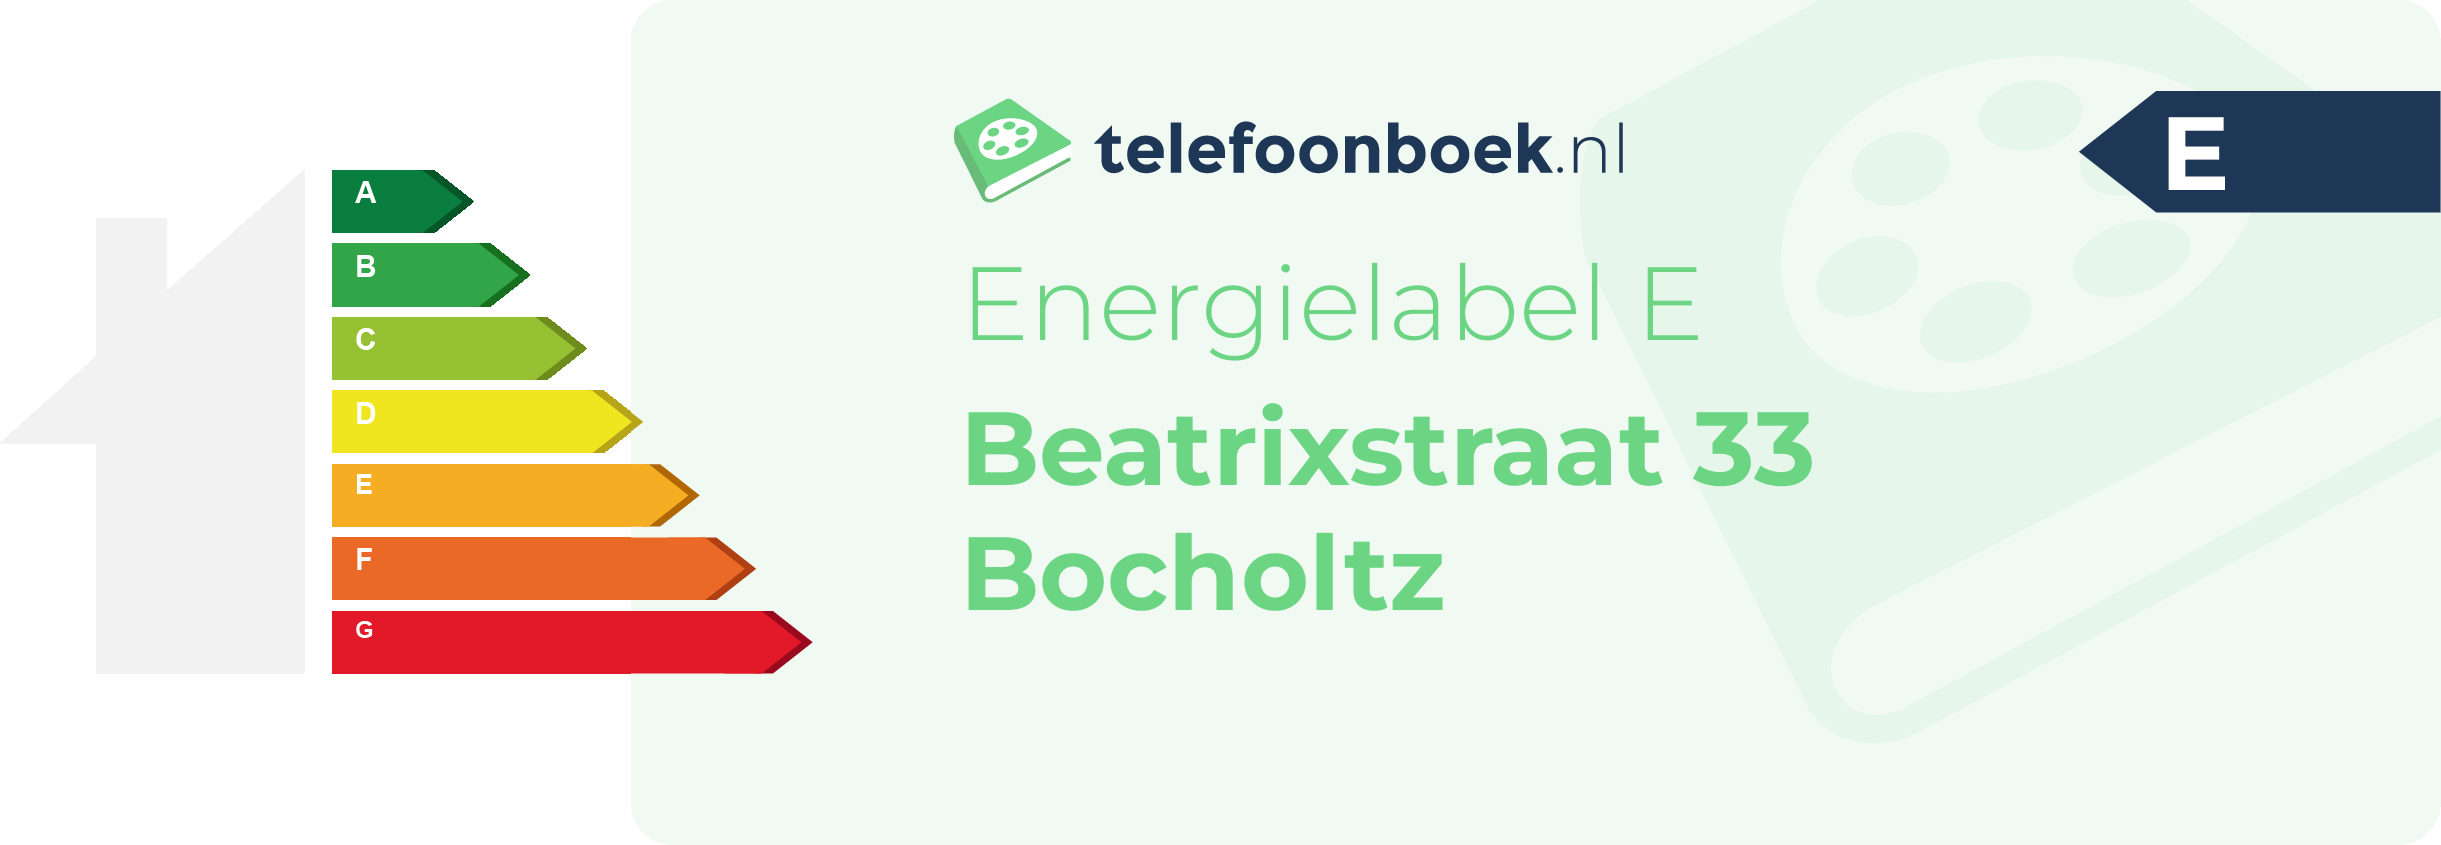 Energielabel Beatrixstraat 33 Bocholtz